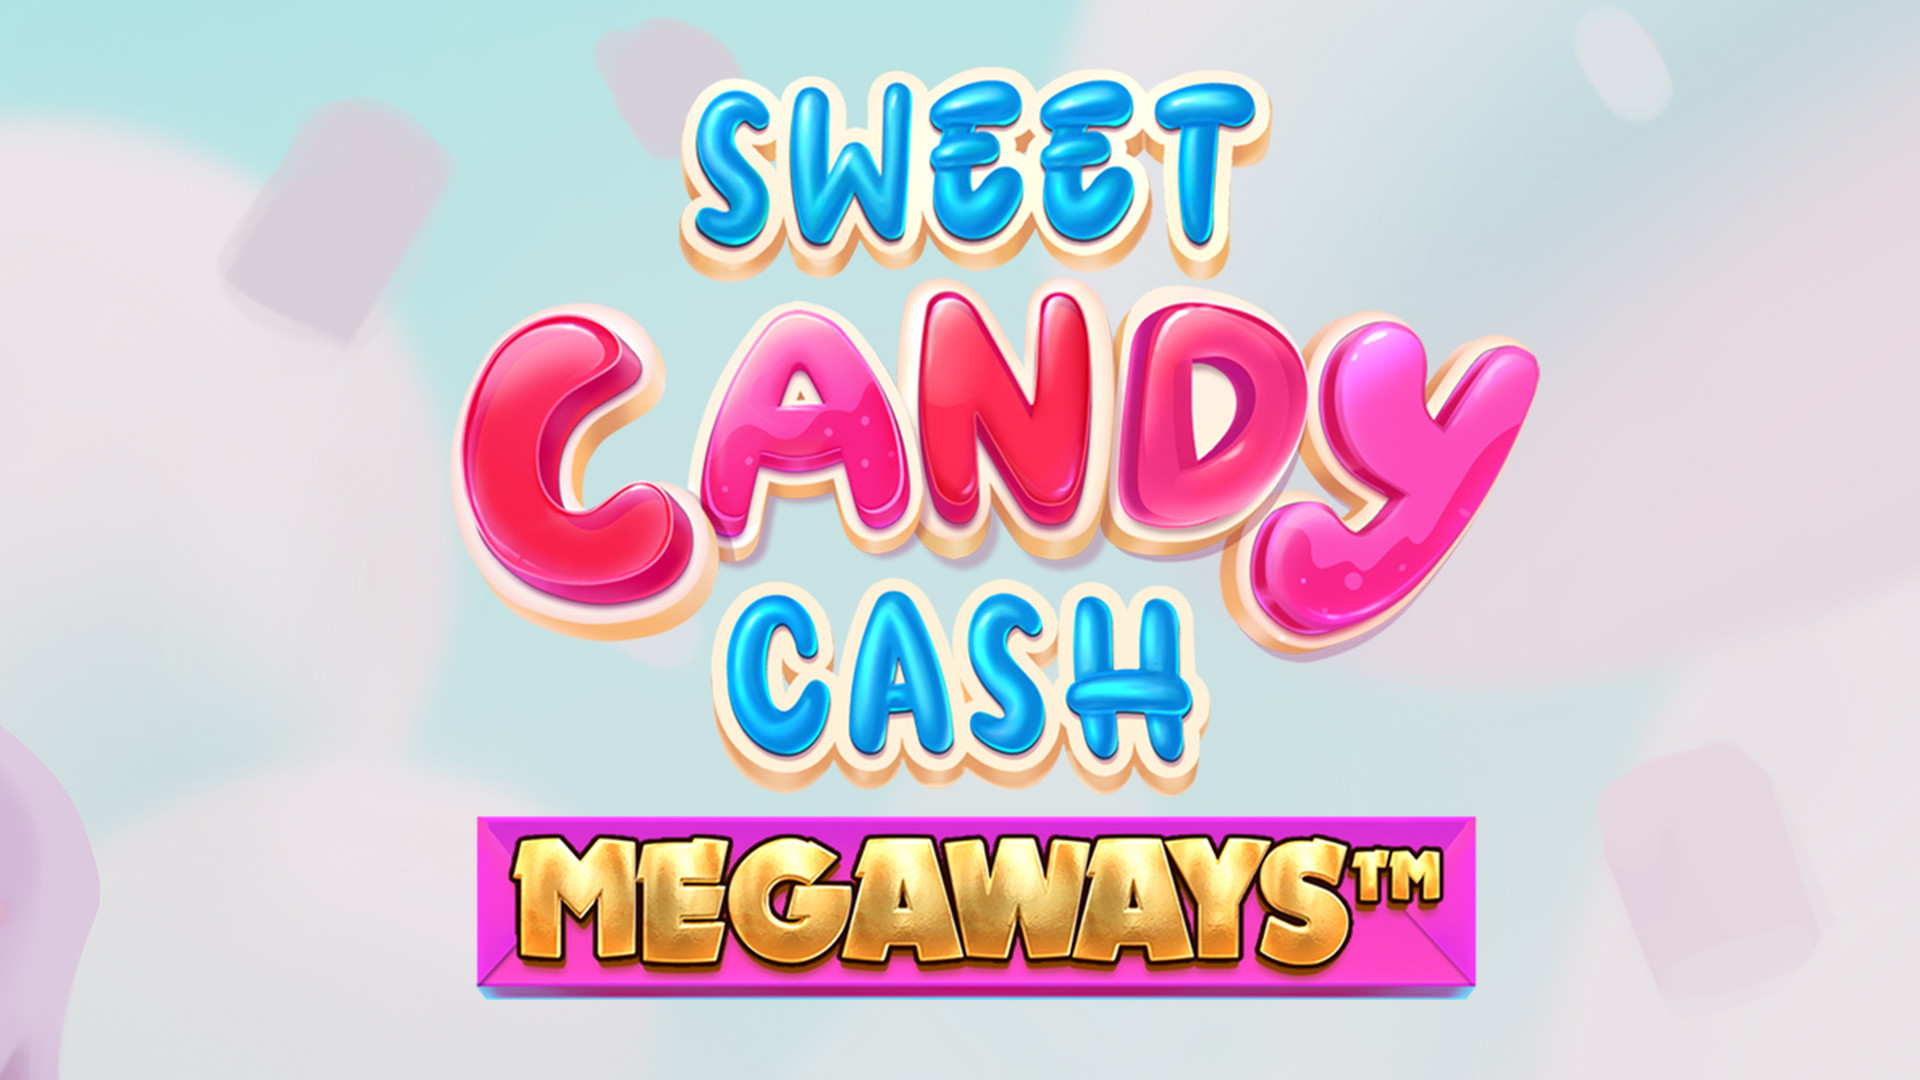 Sweet Candy Cash MEGAWAYS